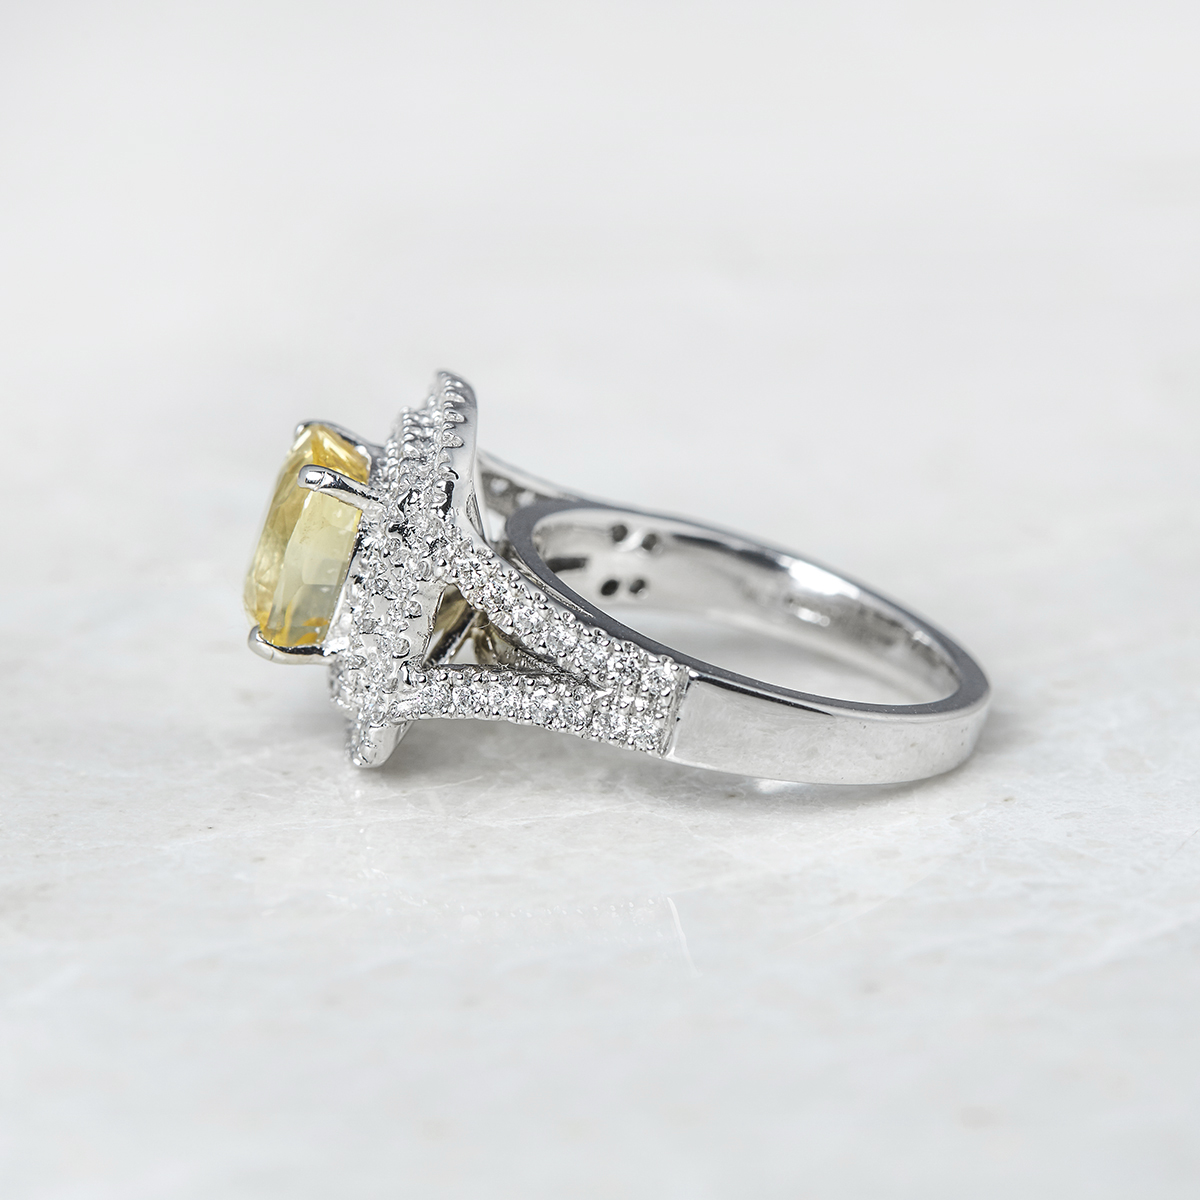 Unbranded, Platinum Cushion Cut 3.56ct Yellow Sapphire & 0.85ct Diamond Ring - Image 3 of 5